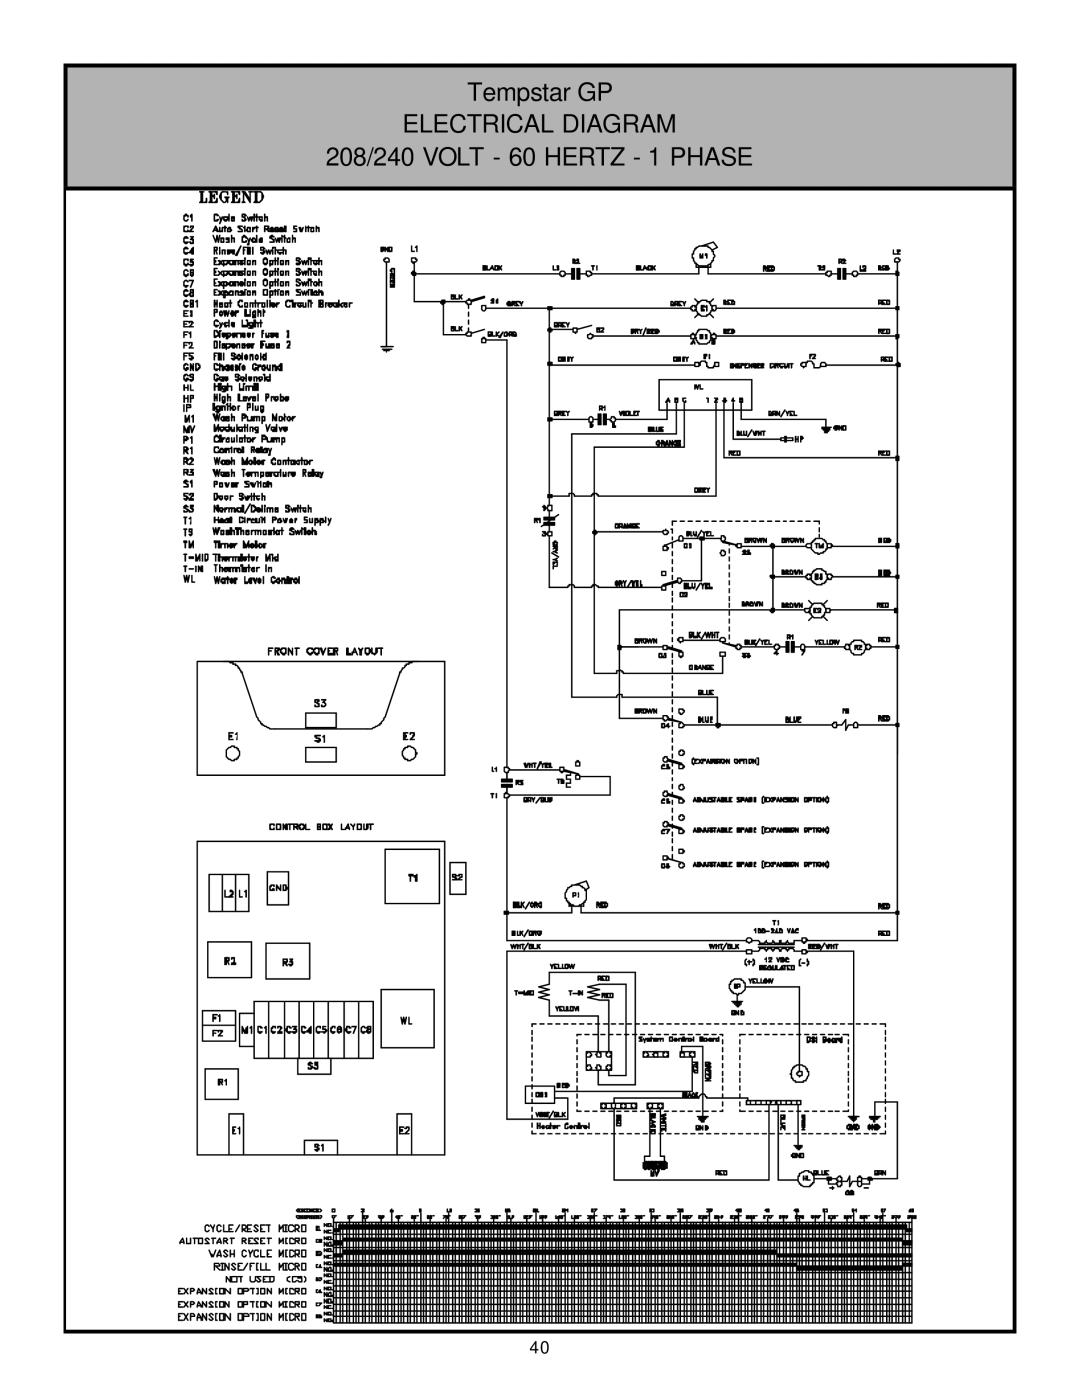 Jackson Tempstar GP technical manual 208/240 VOLT - 60 HERTZ - 1 PHASE, Electrical Diagram 